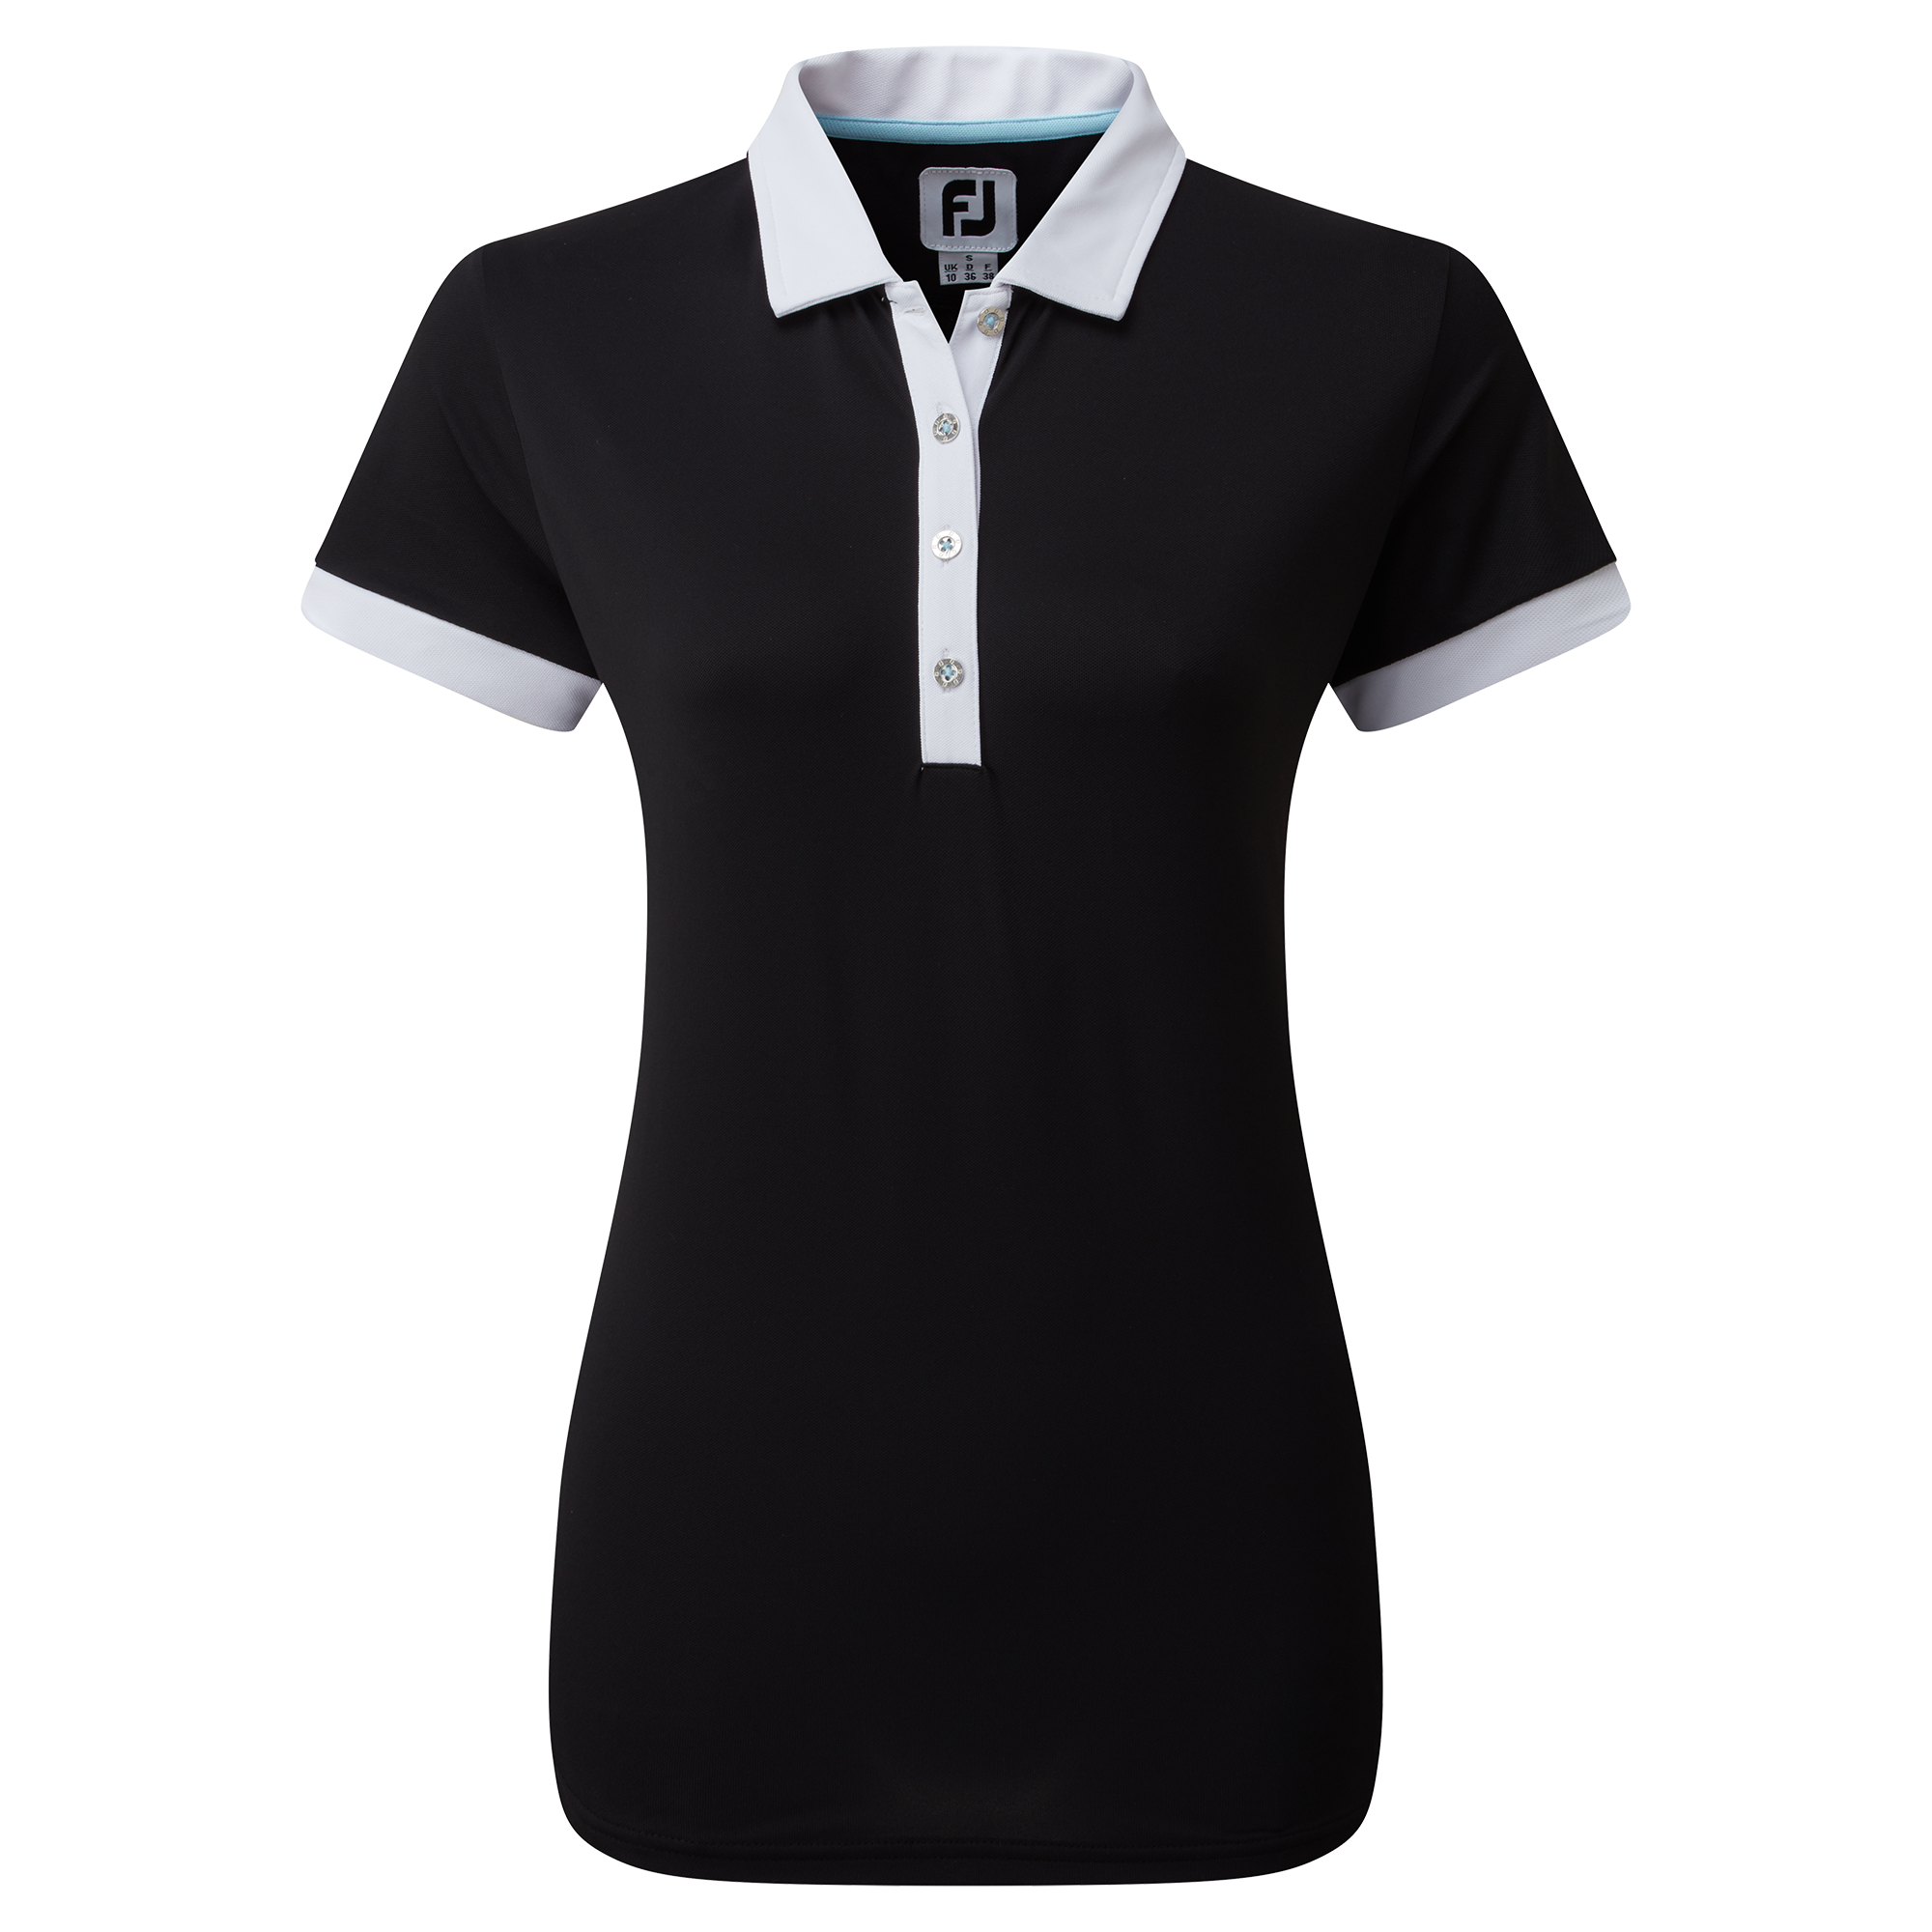 FootJoy Colour Block Pique dámské golfové triko, černé, vel. M